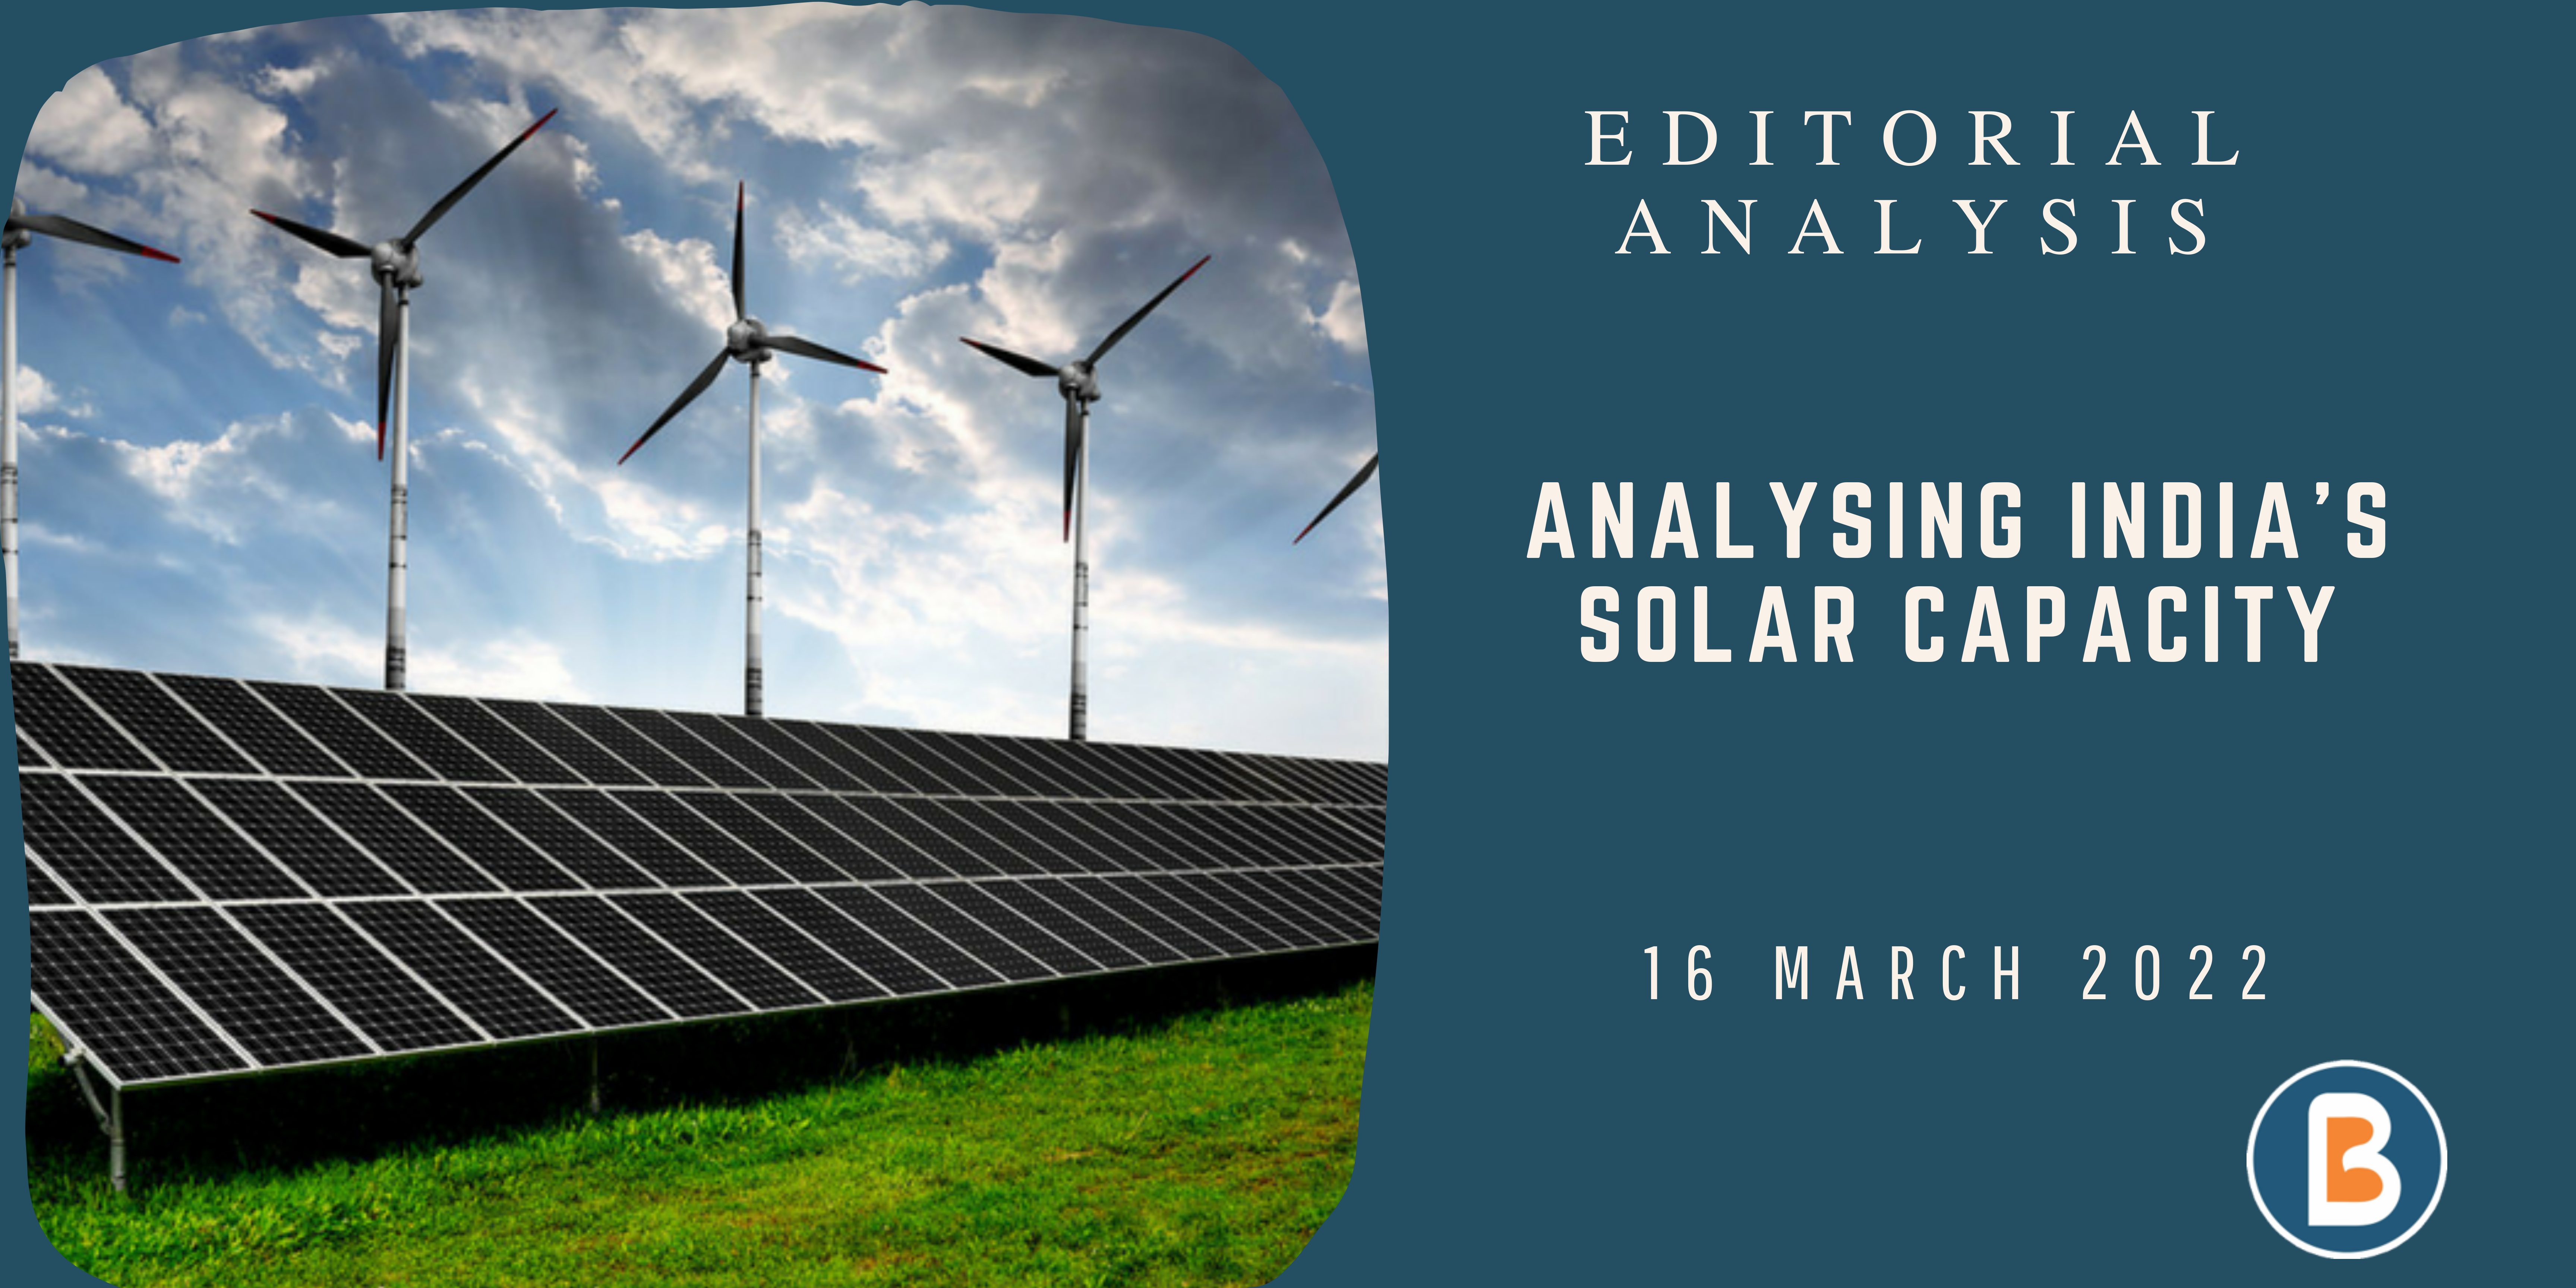 Editorial Analysis for IAS - Analysing India’s Solar Capacity